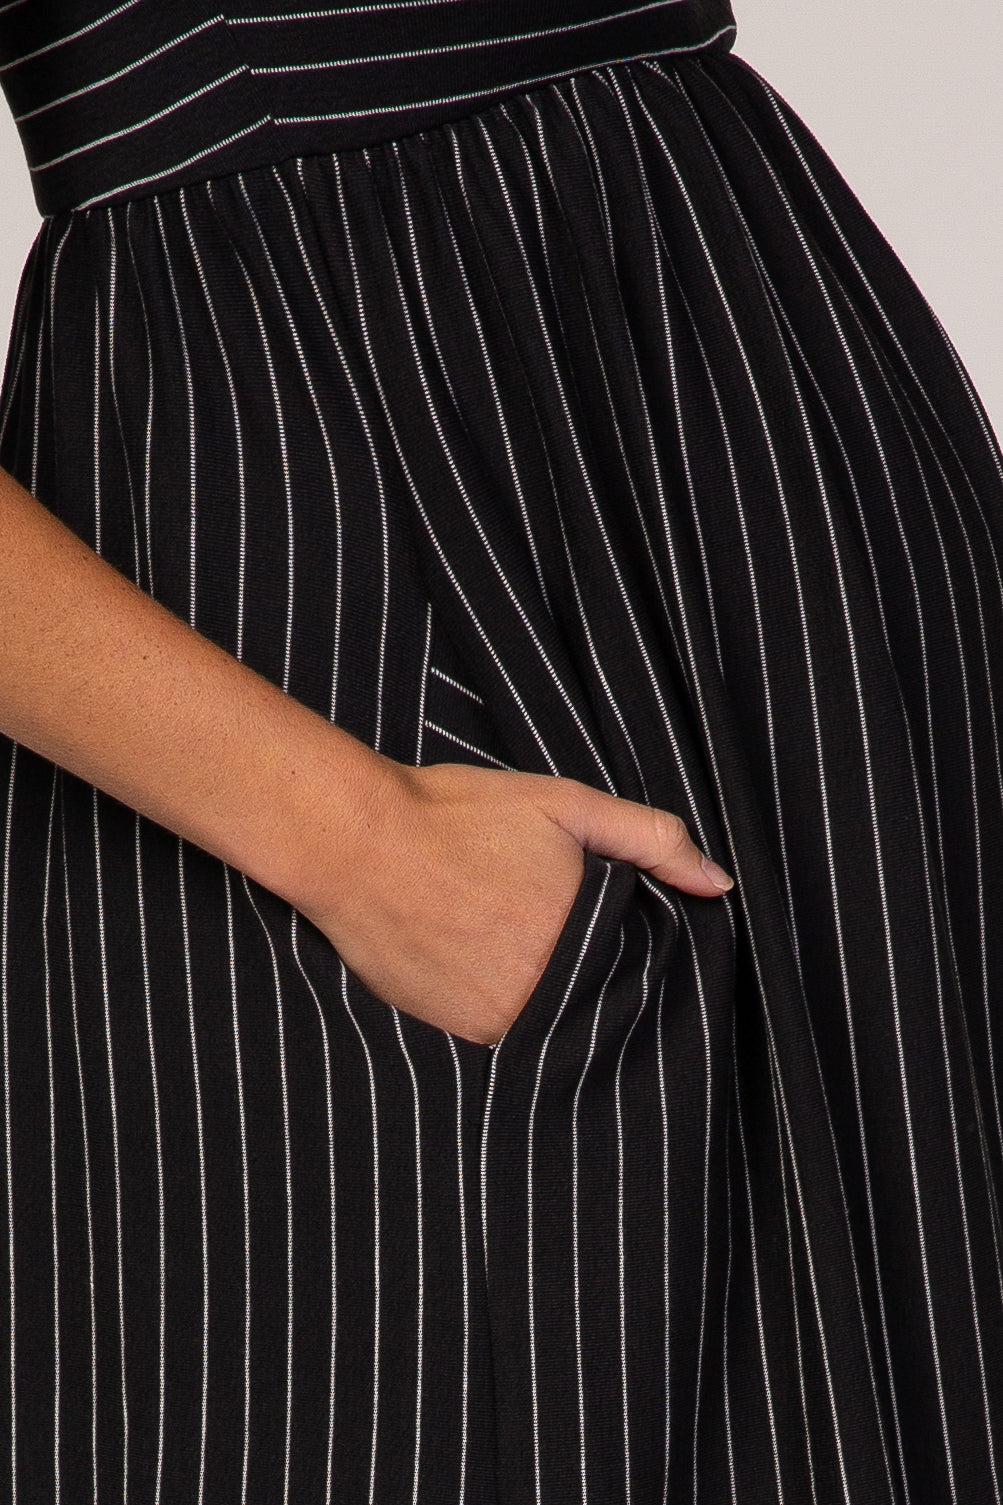 Black Striped Maternity Babydoll Dress